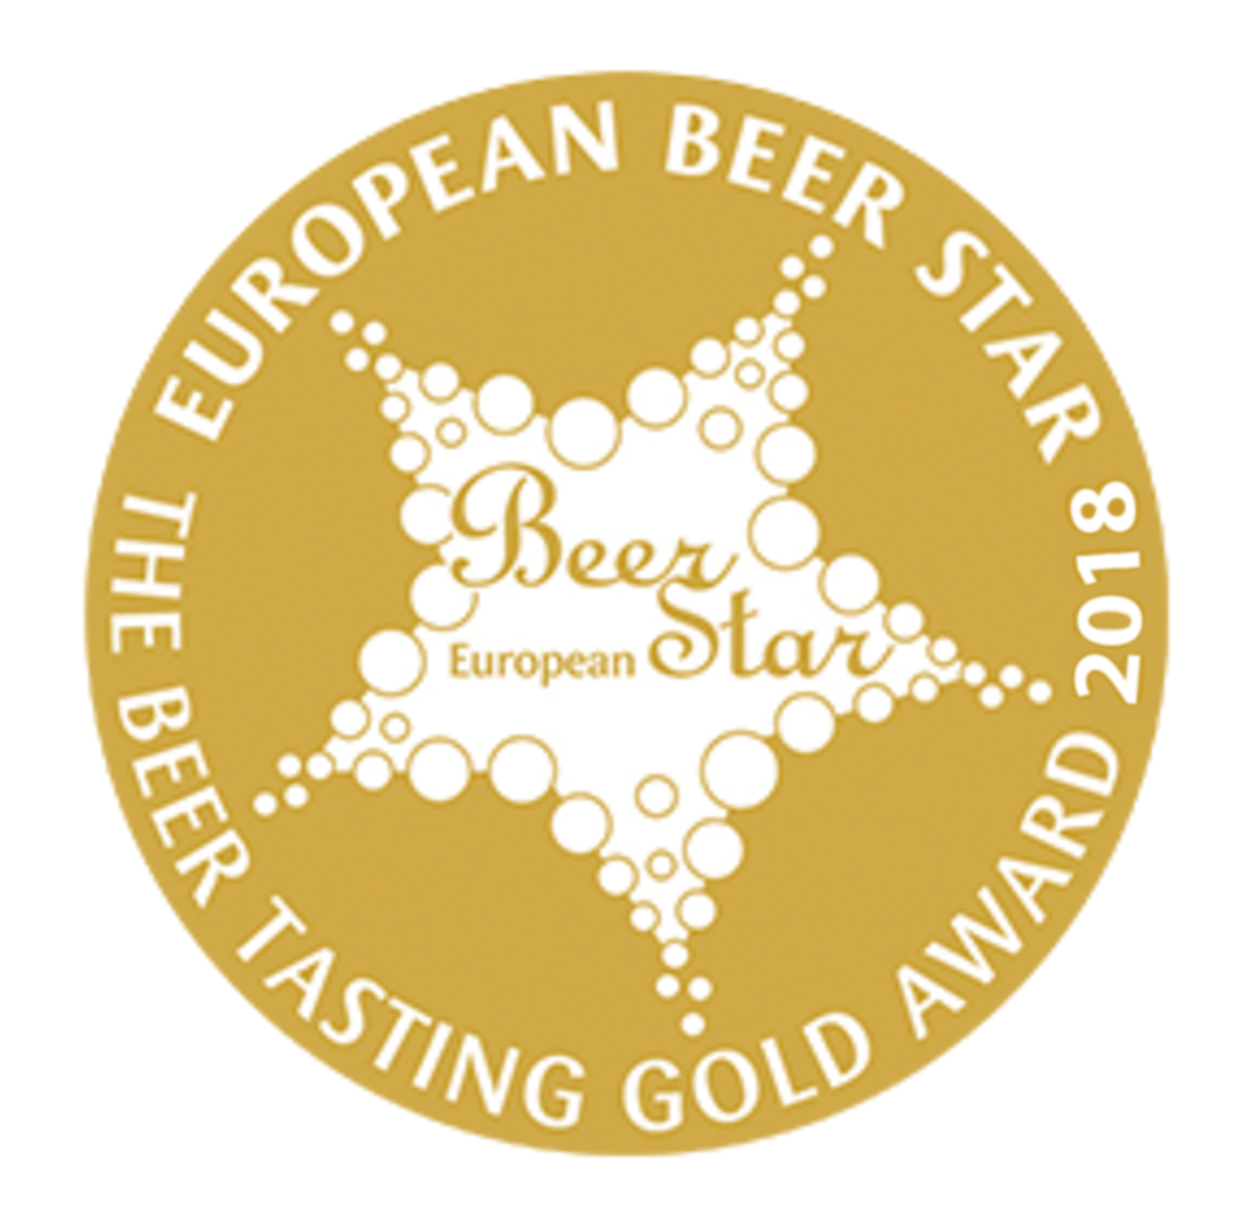  2018 European Beer Star gold